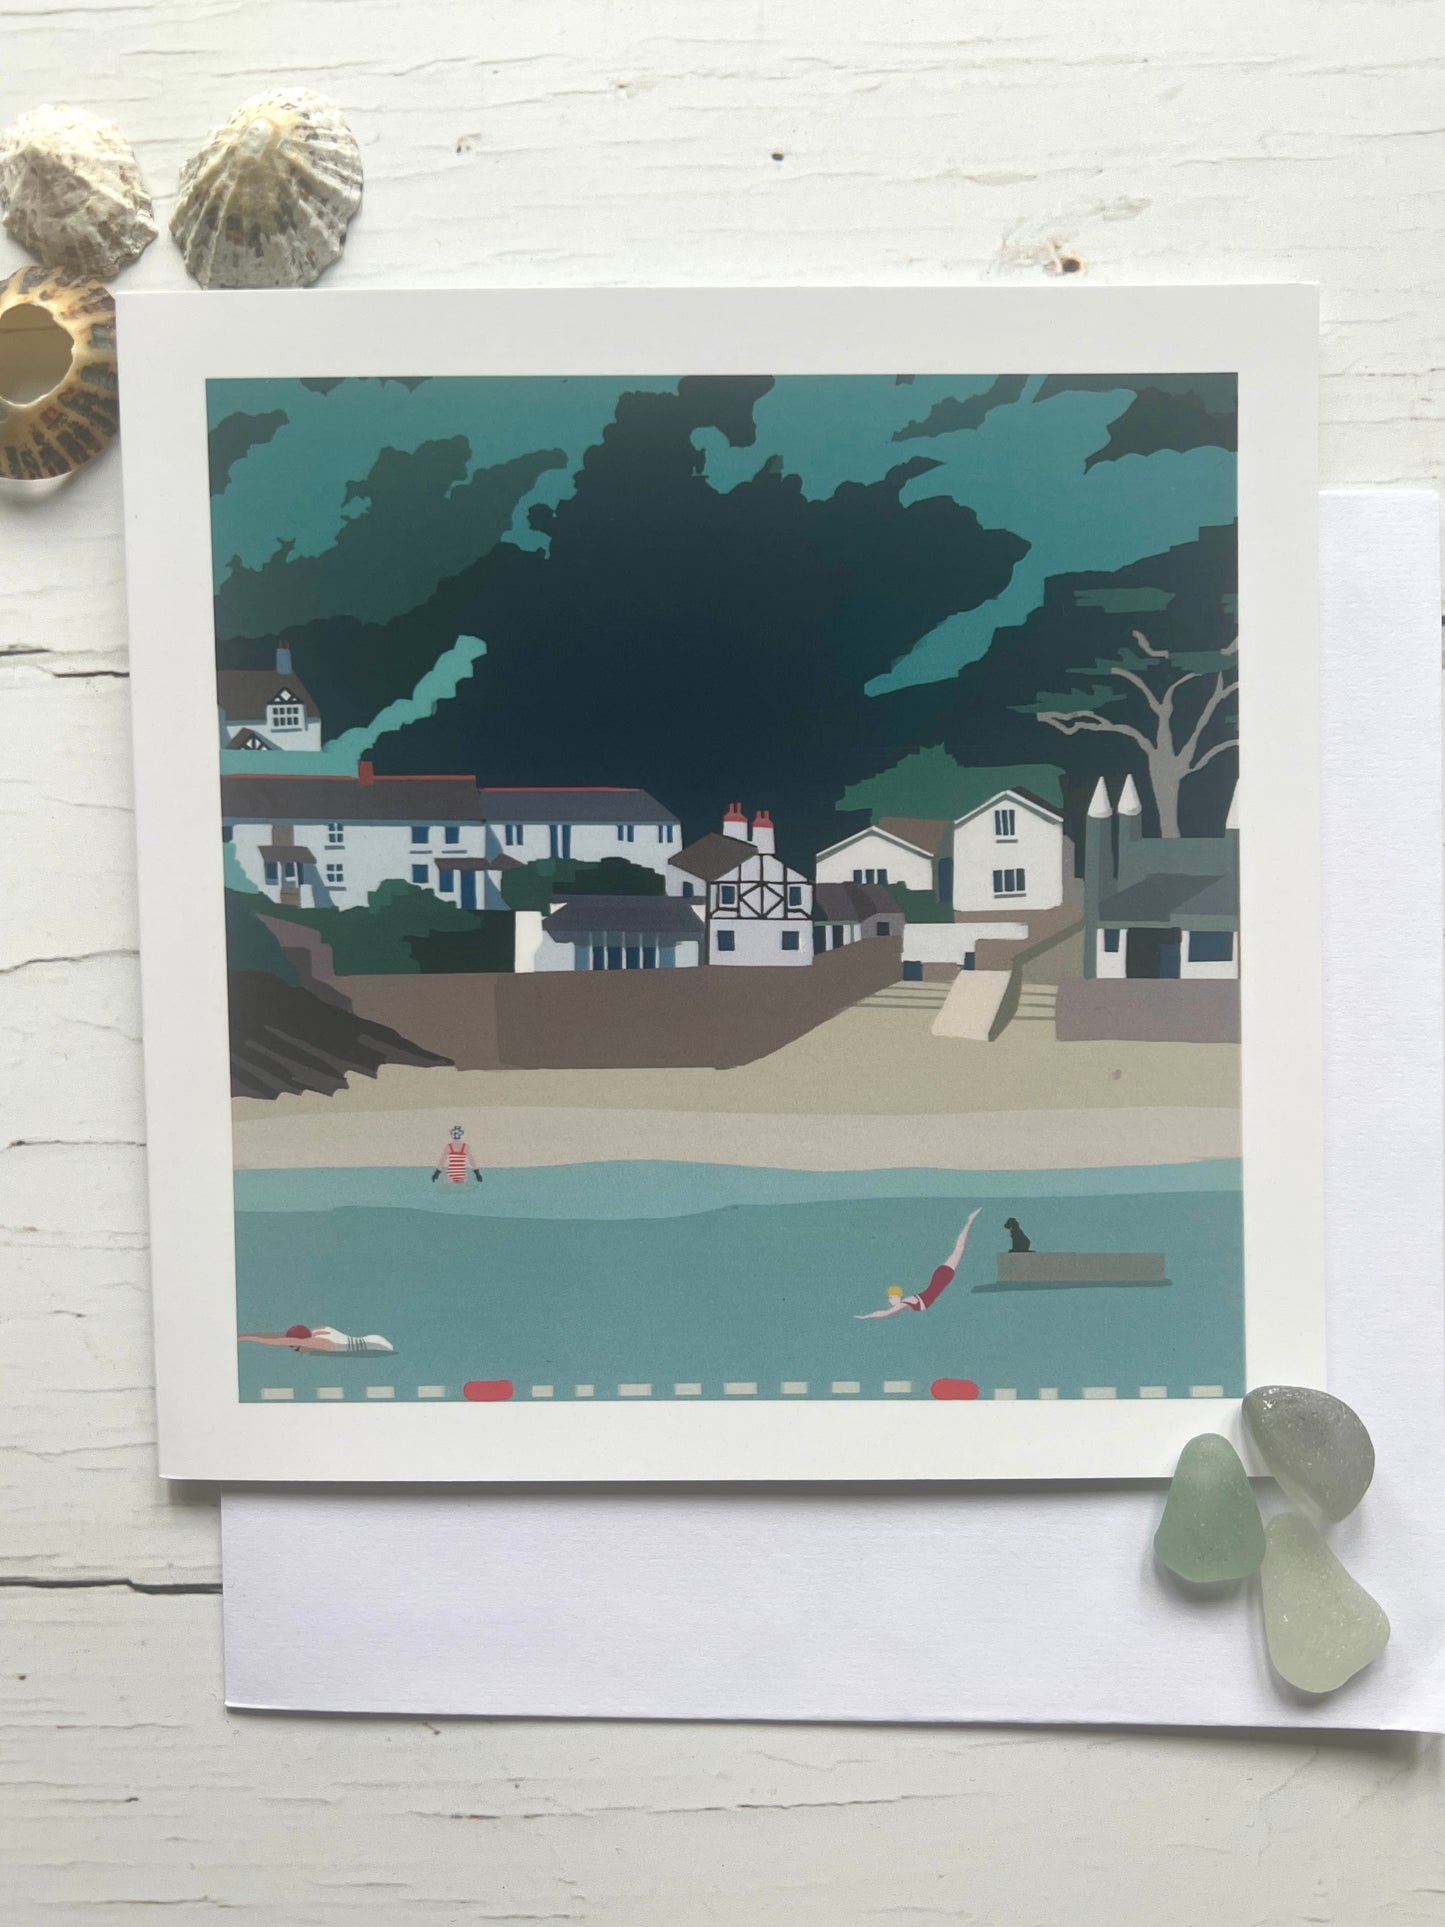 Readymoney Cove & Fowey Illustrated Greetings Cards